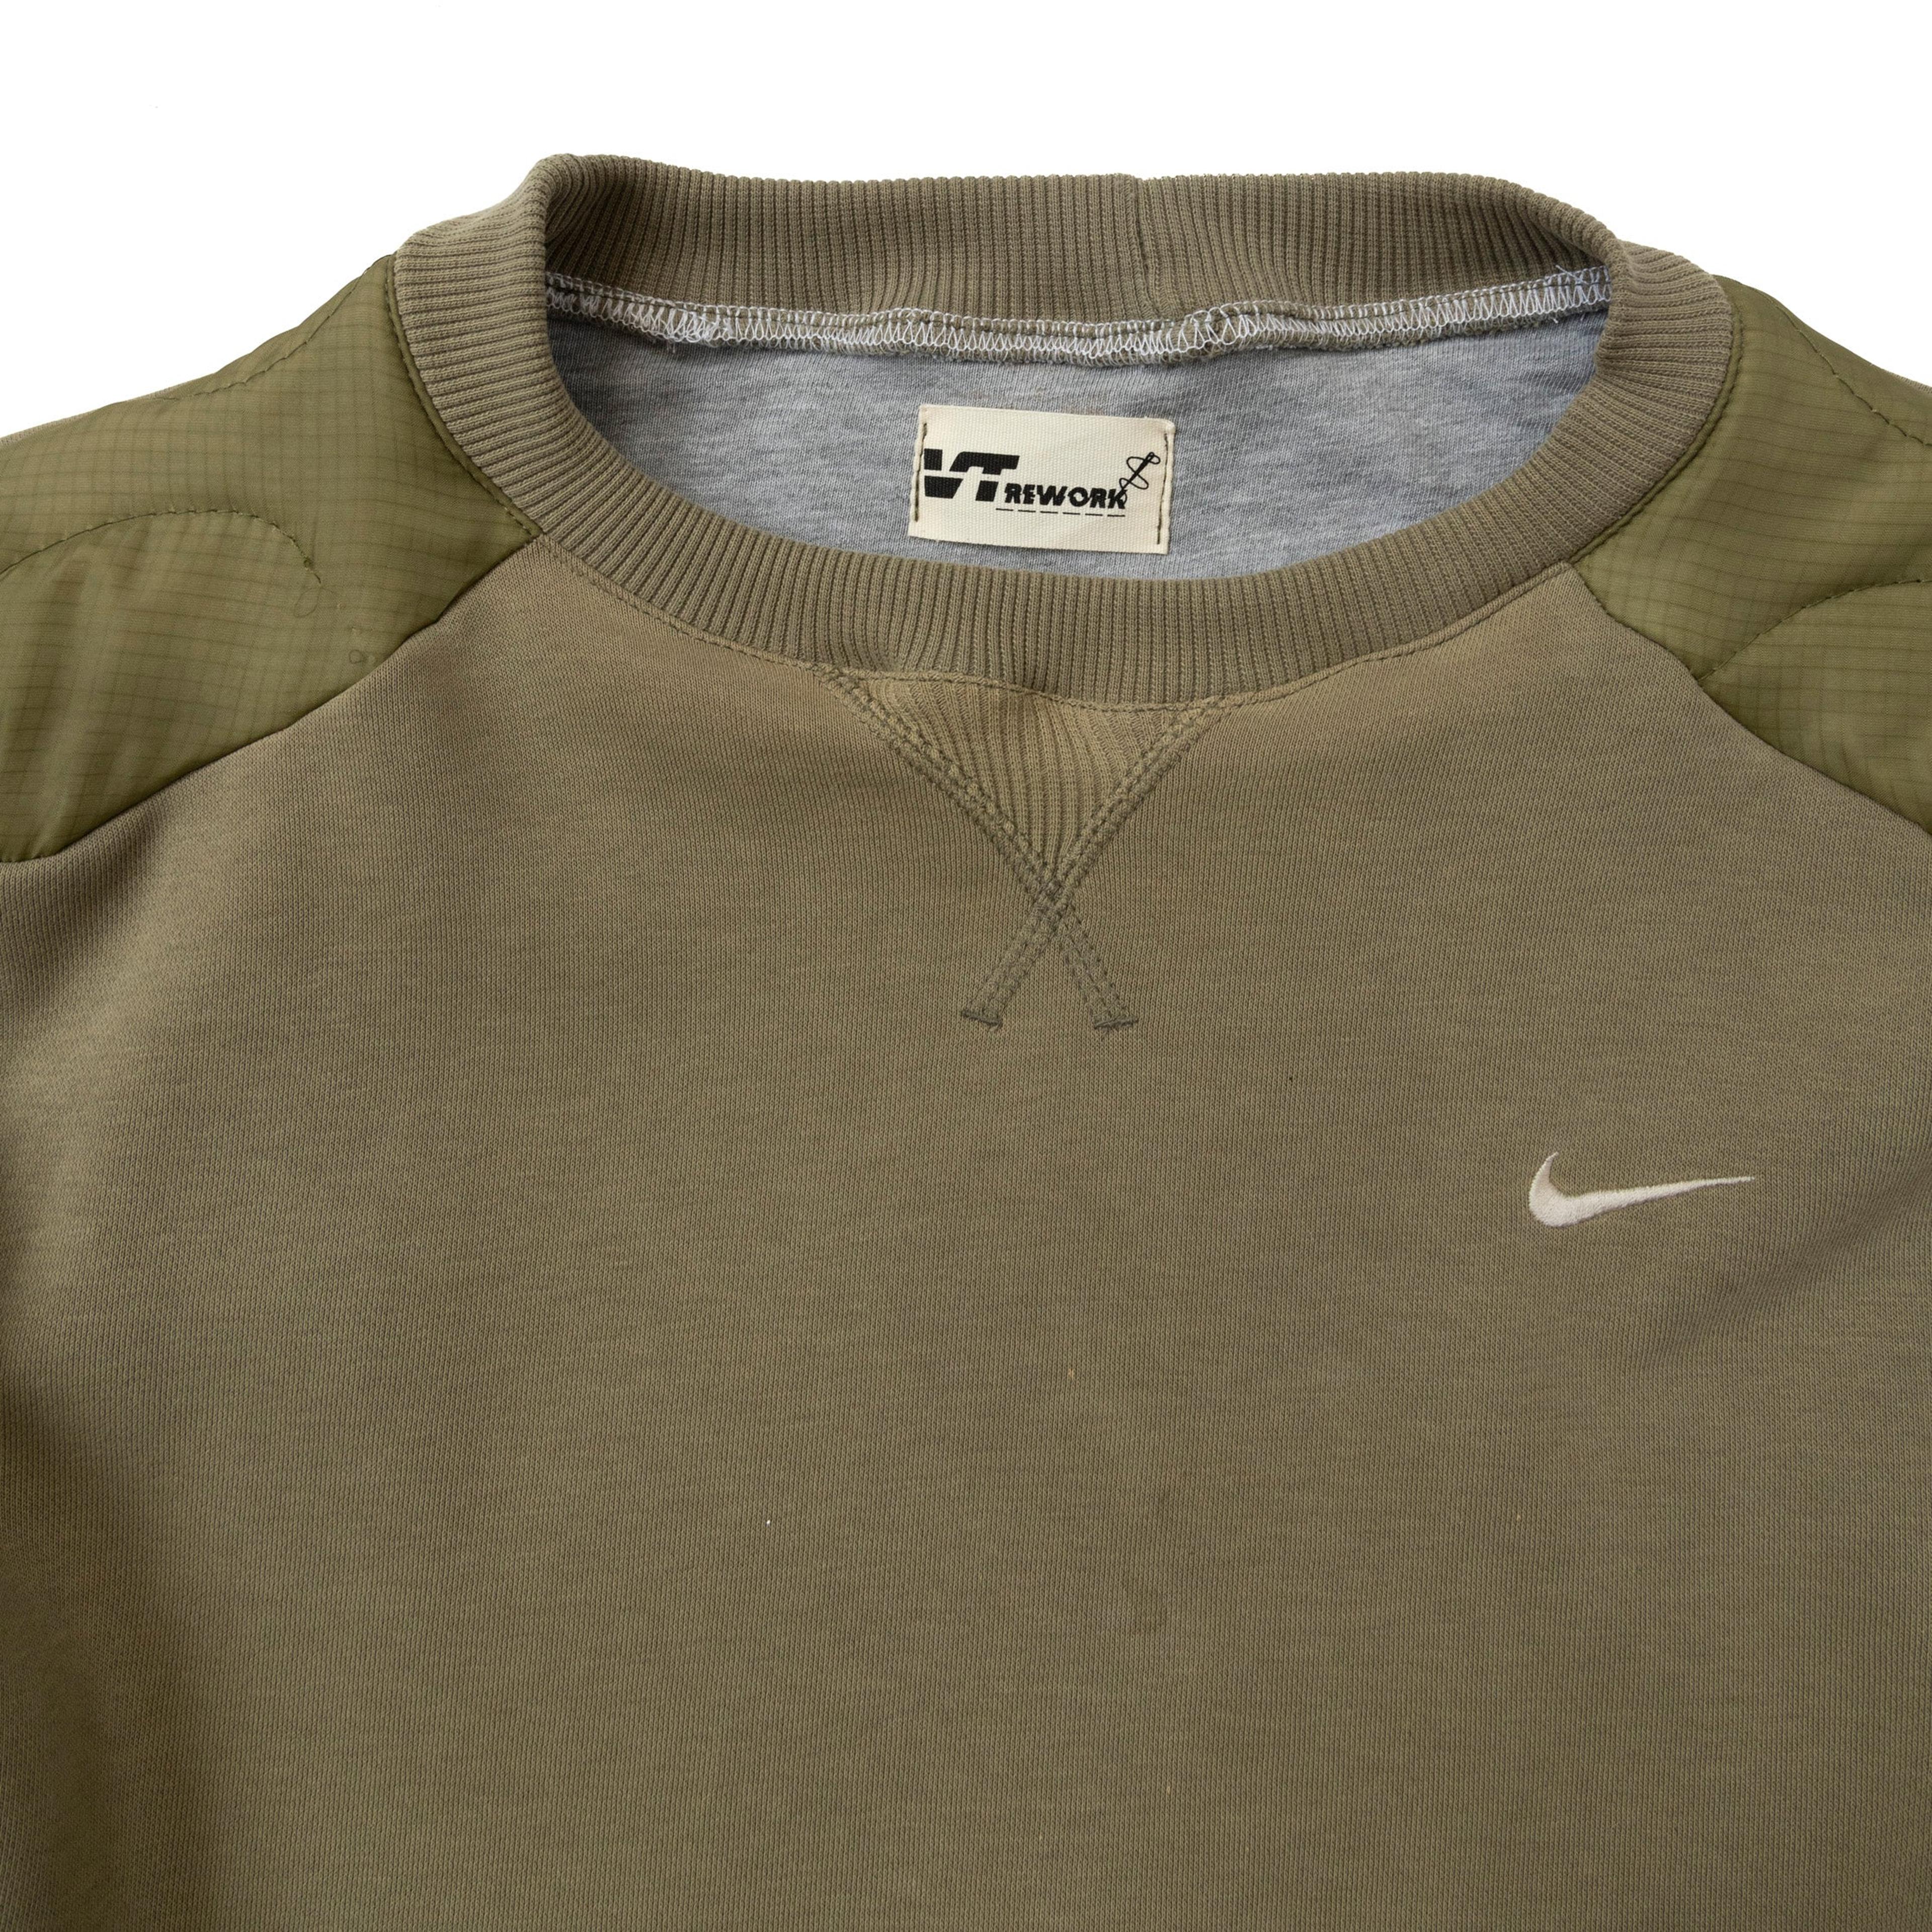 Alternate View 3 of VT Rework: Nike Technical Panel Sweater